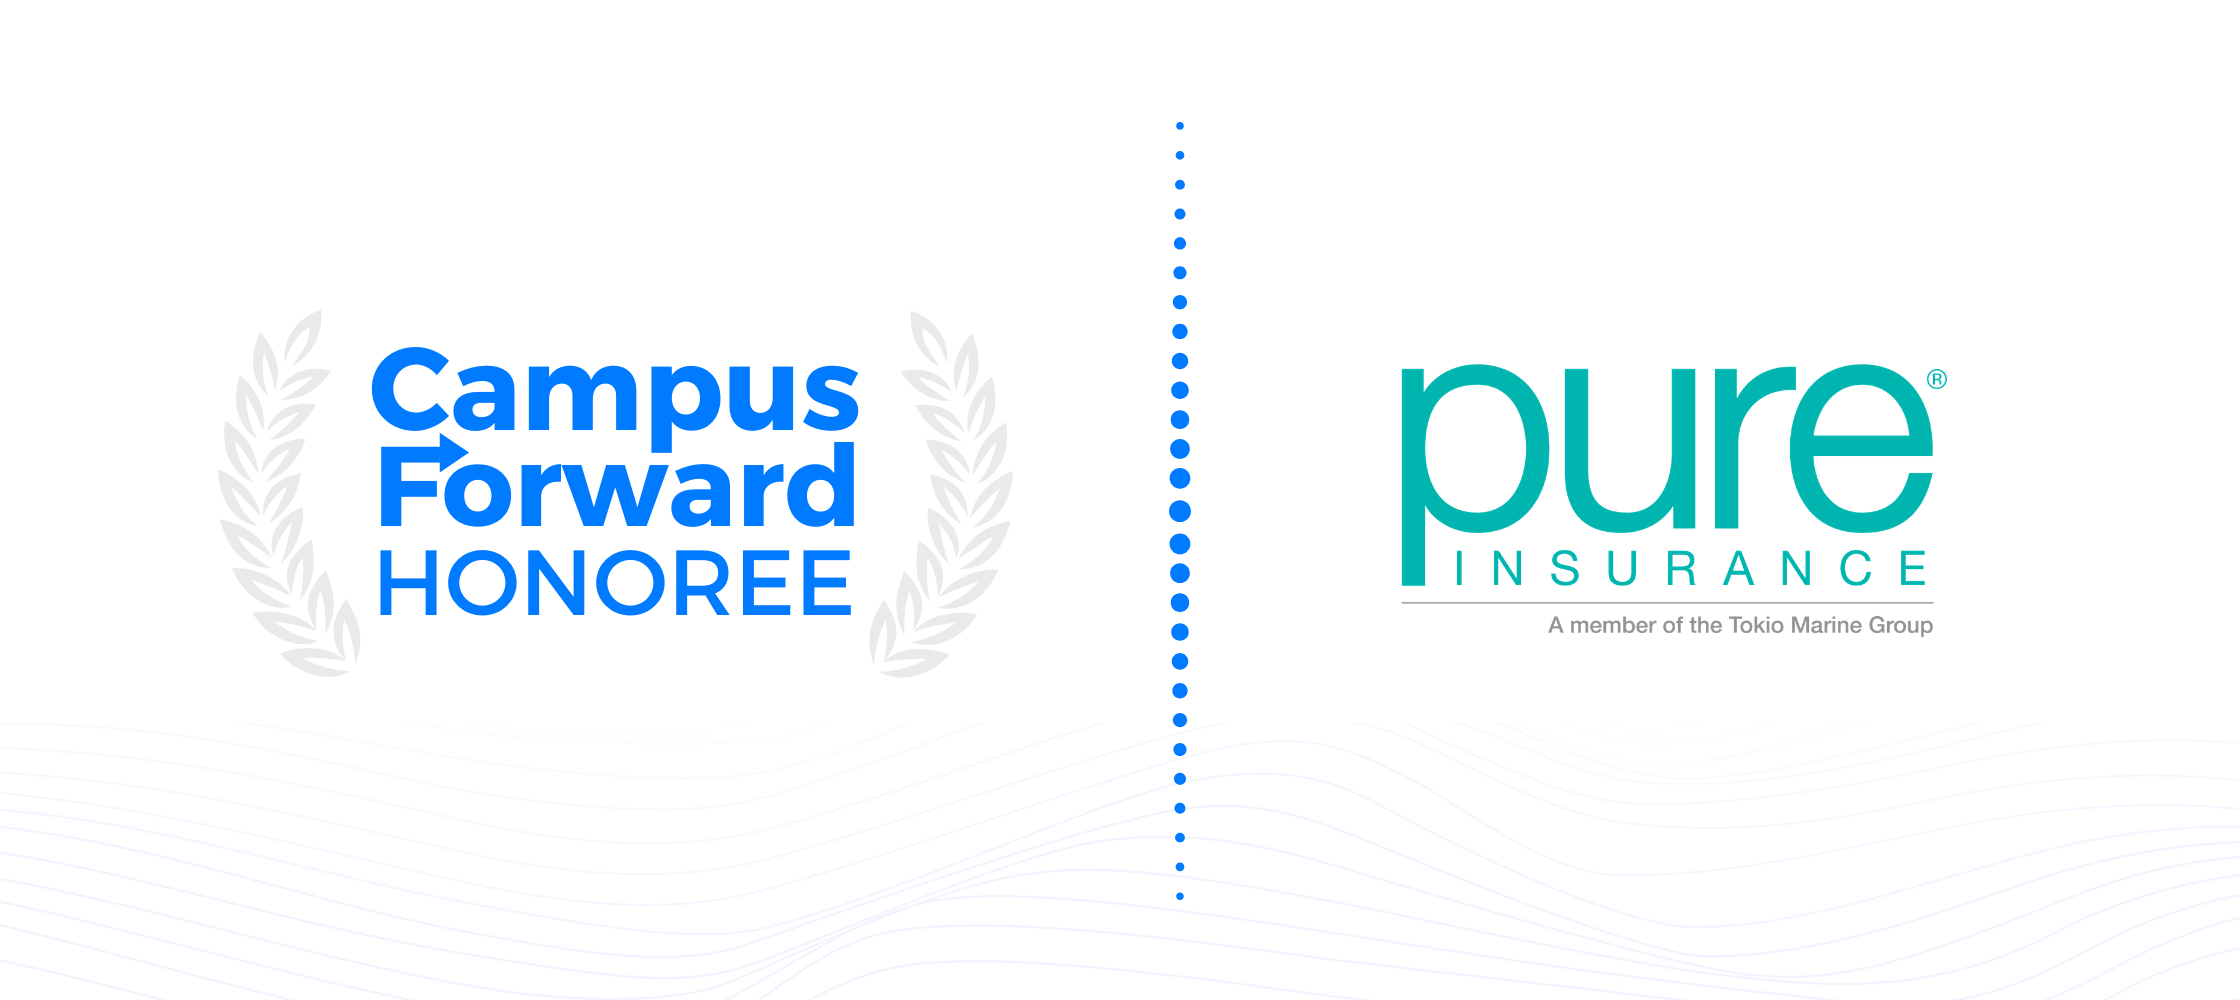 Campus Forward Honoree - PURE Insurance